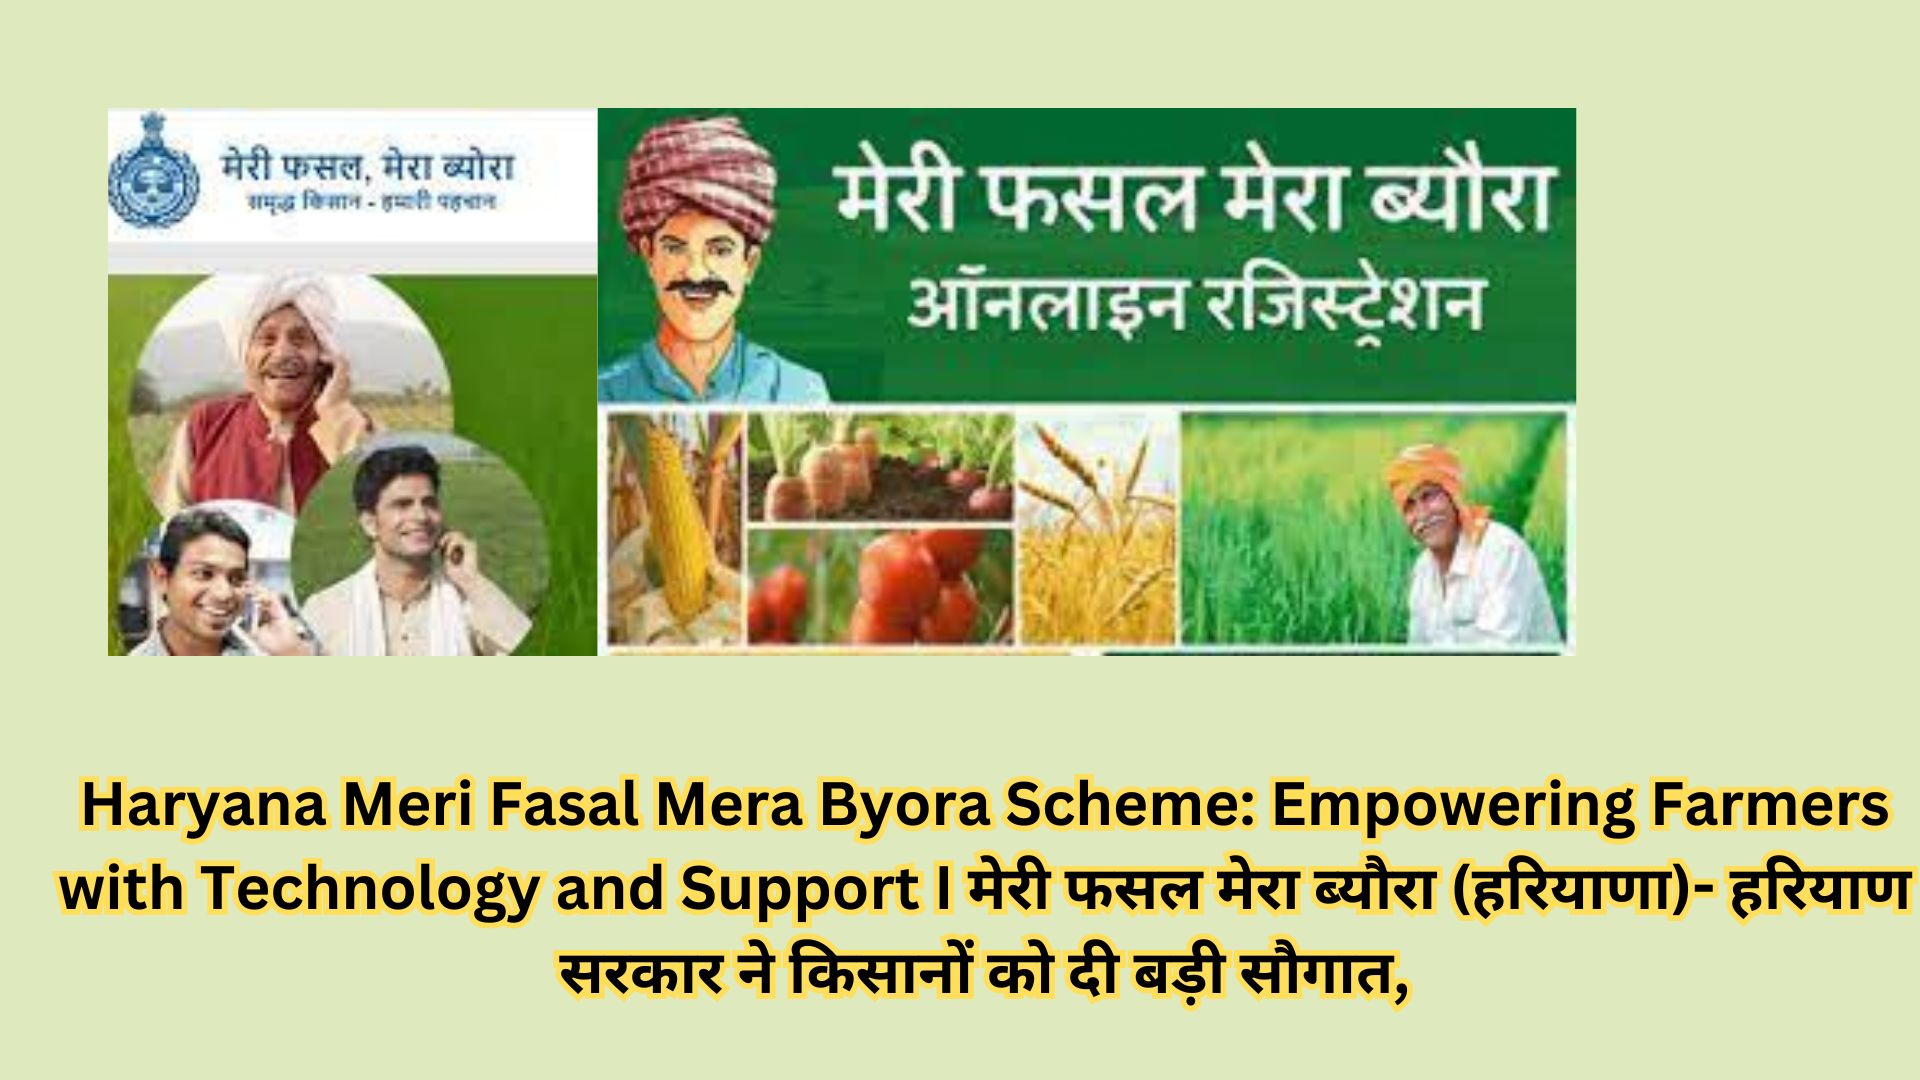 Haryana Meri Fasal Mera Byora Scheme: Empowering Farmers with Technology and Support I मेरी फसल मेरा ब्यौरा (हरियाणा)- हरियाण सरकार ने किसानों को दी बड़ी सौगात,